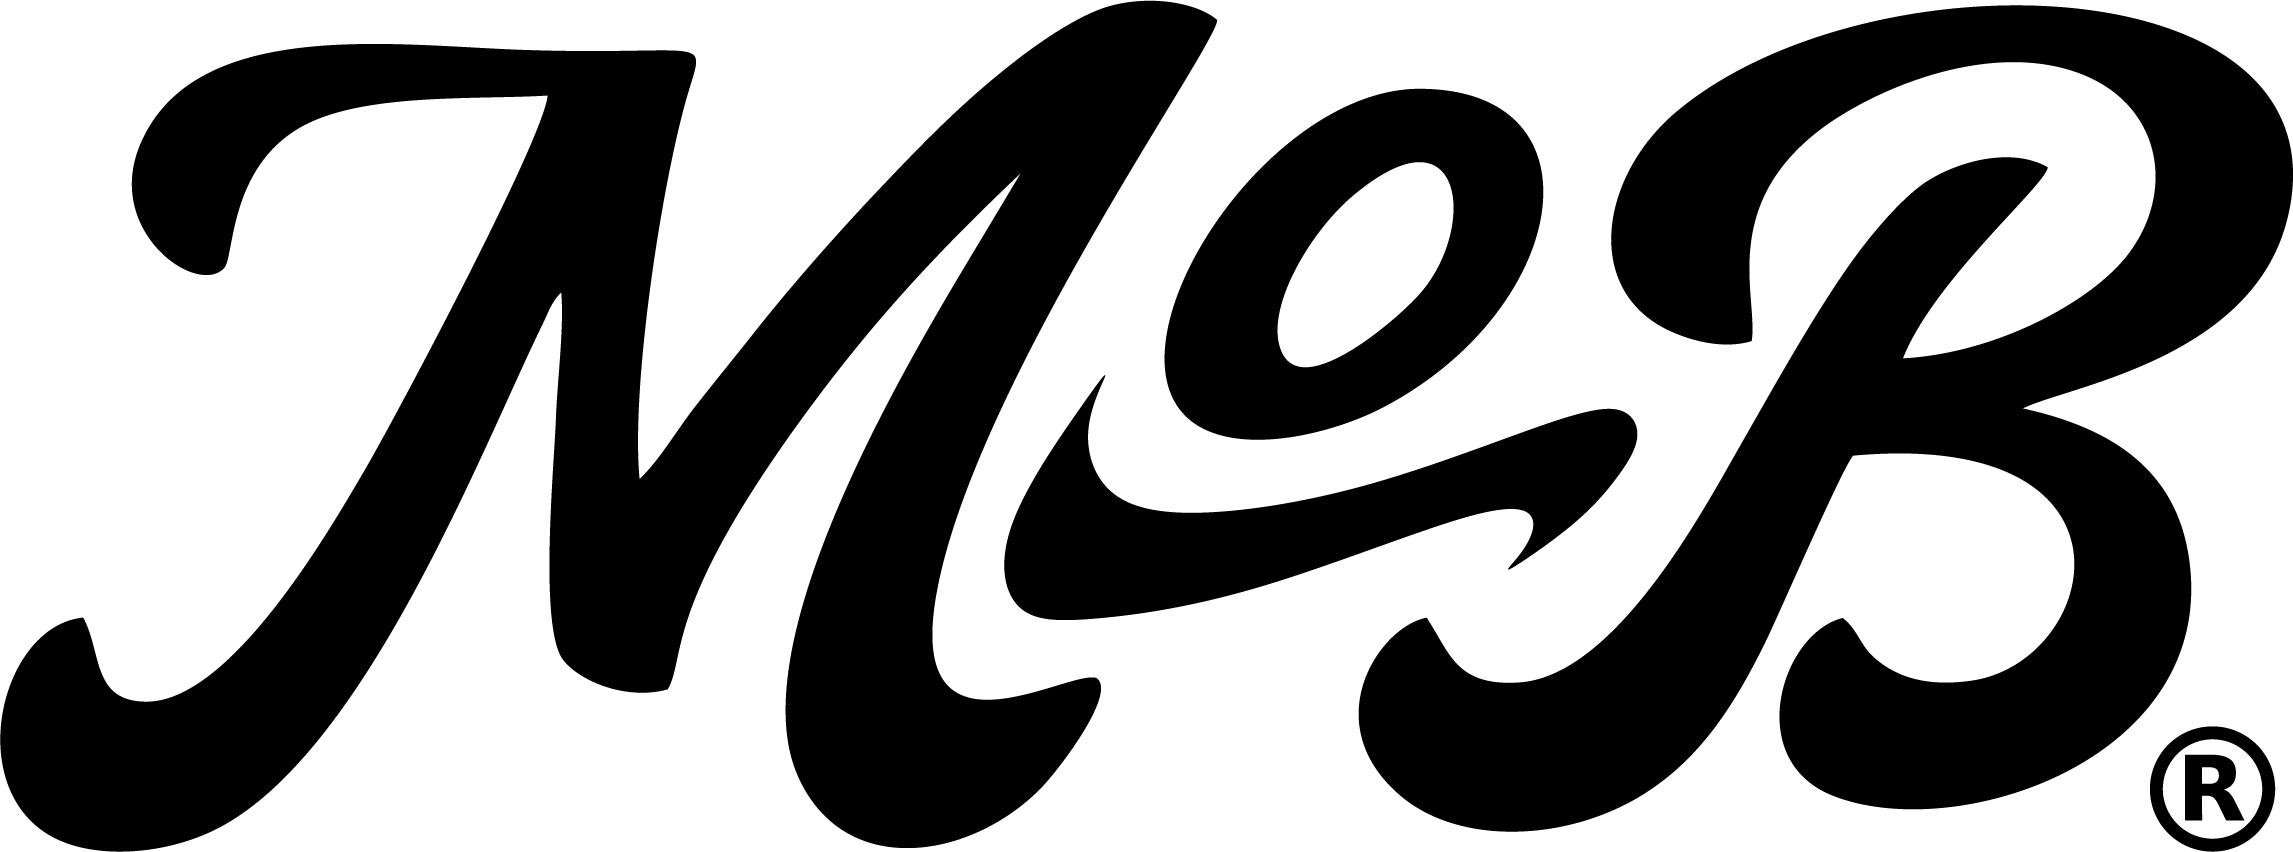 Mob sketched logo - Free logo icons